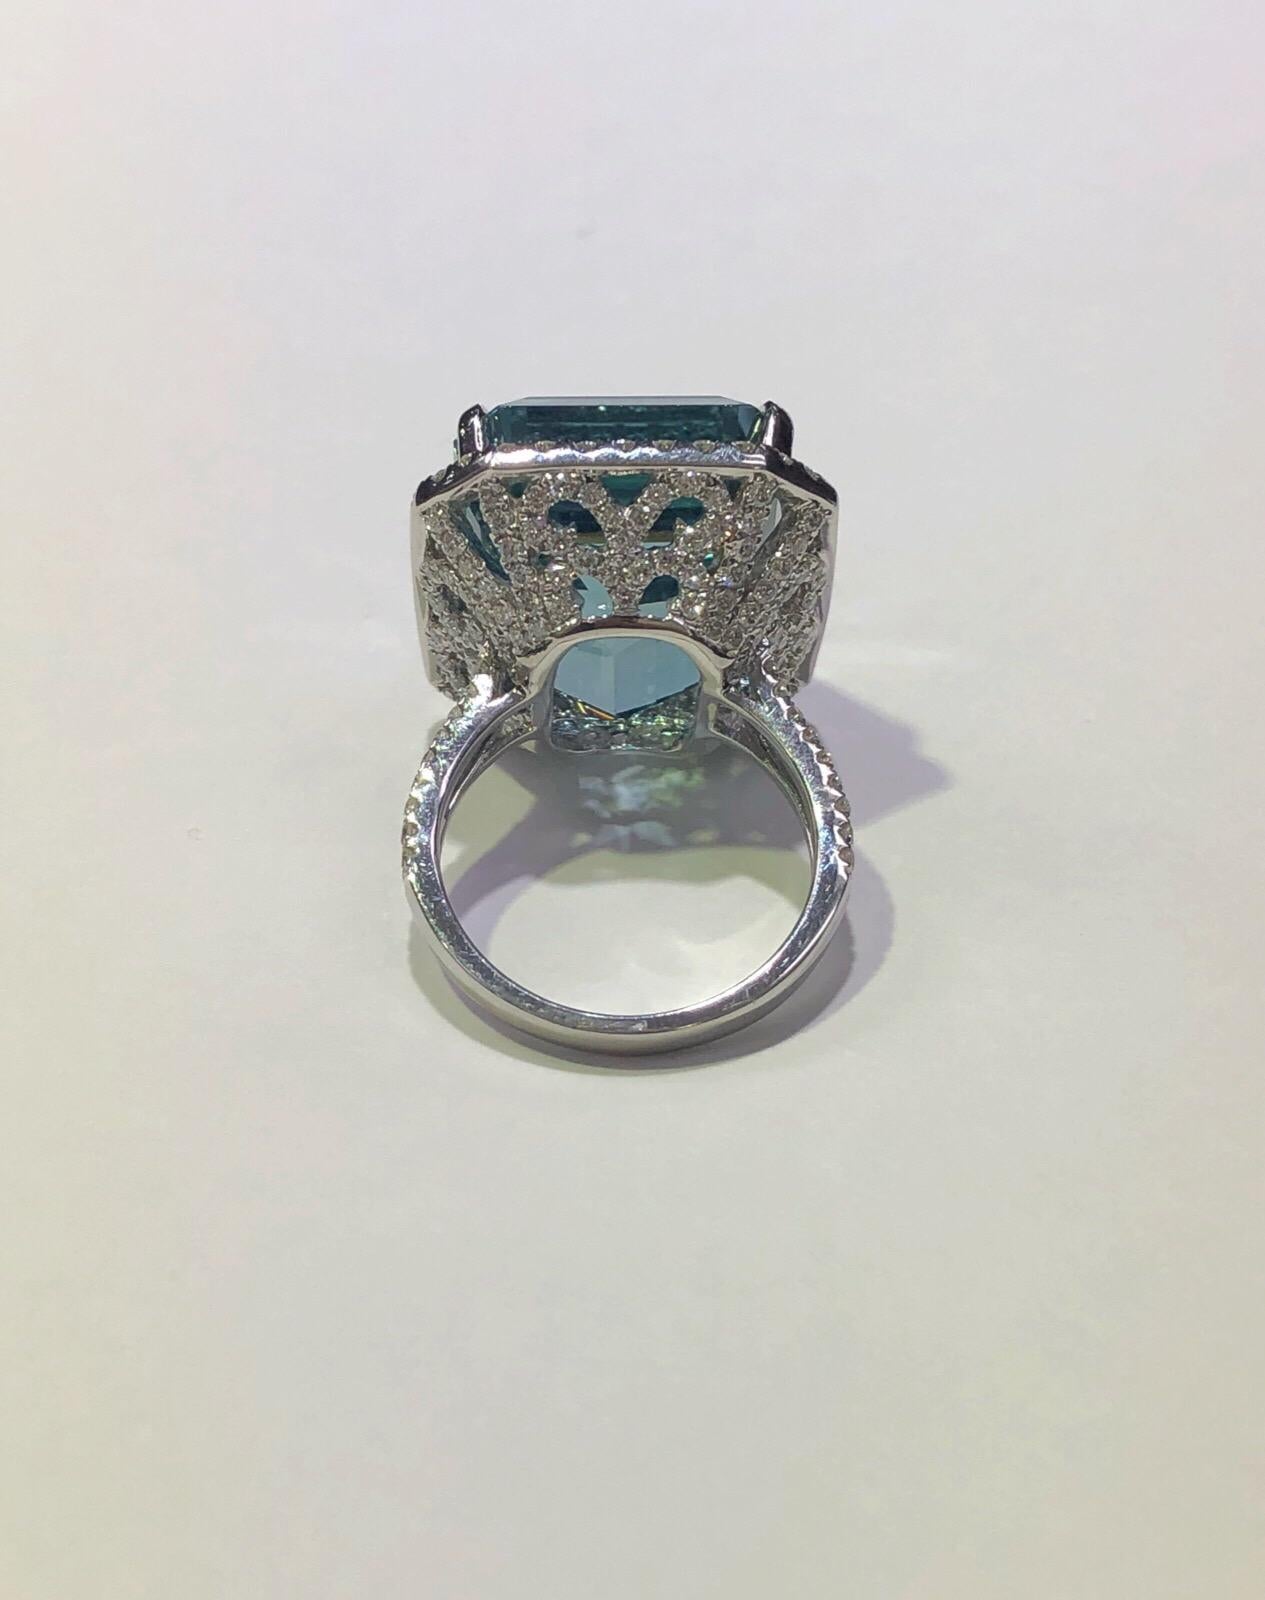 27.30 Carat 'GIA' Aquamarine Emerald Cut 2.50 Total Diamond Weight Cocktail Ring (Smaragdschliff)